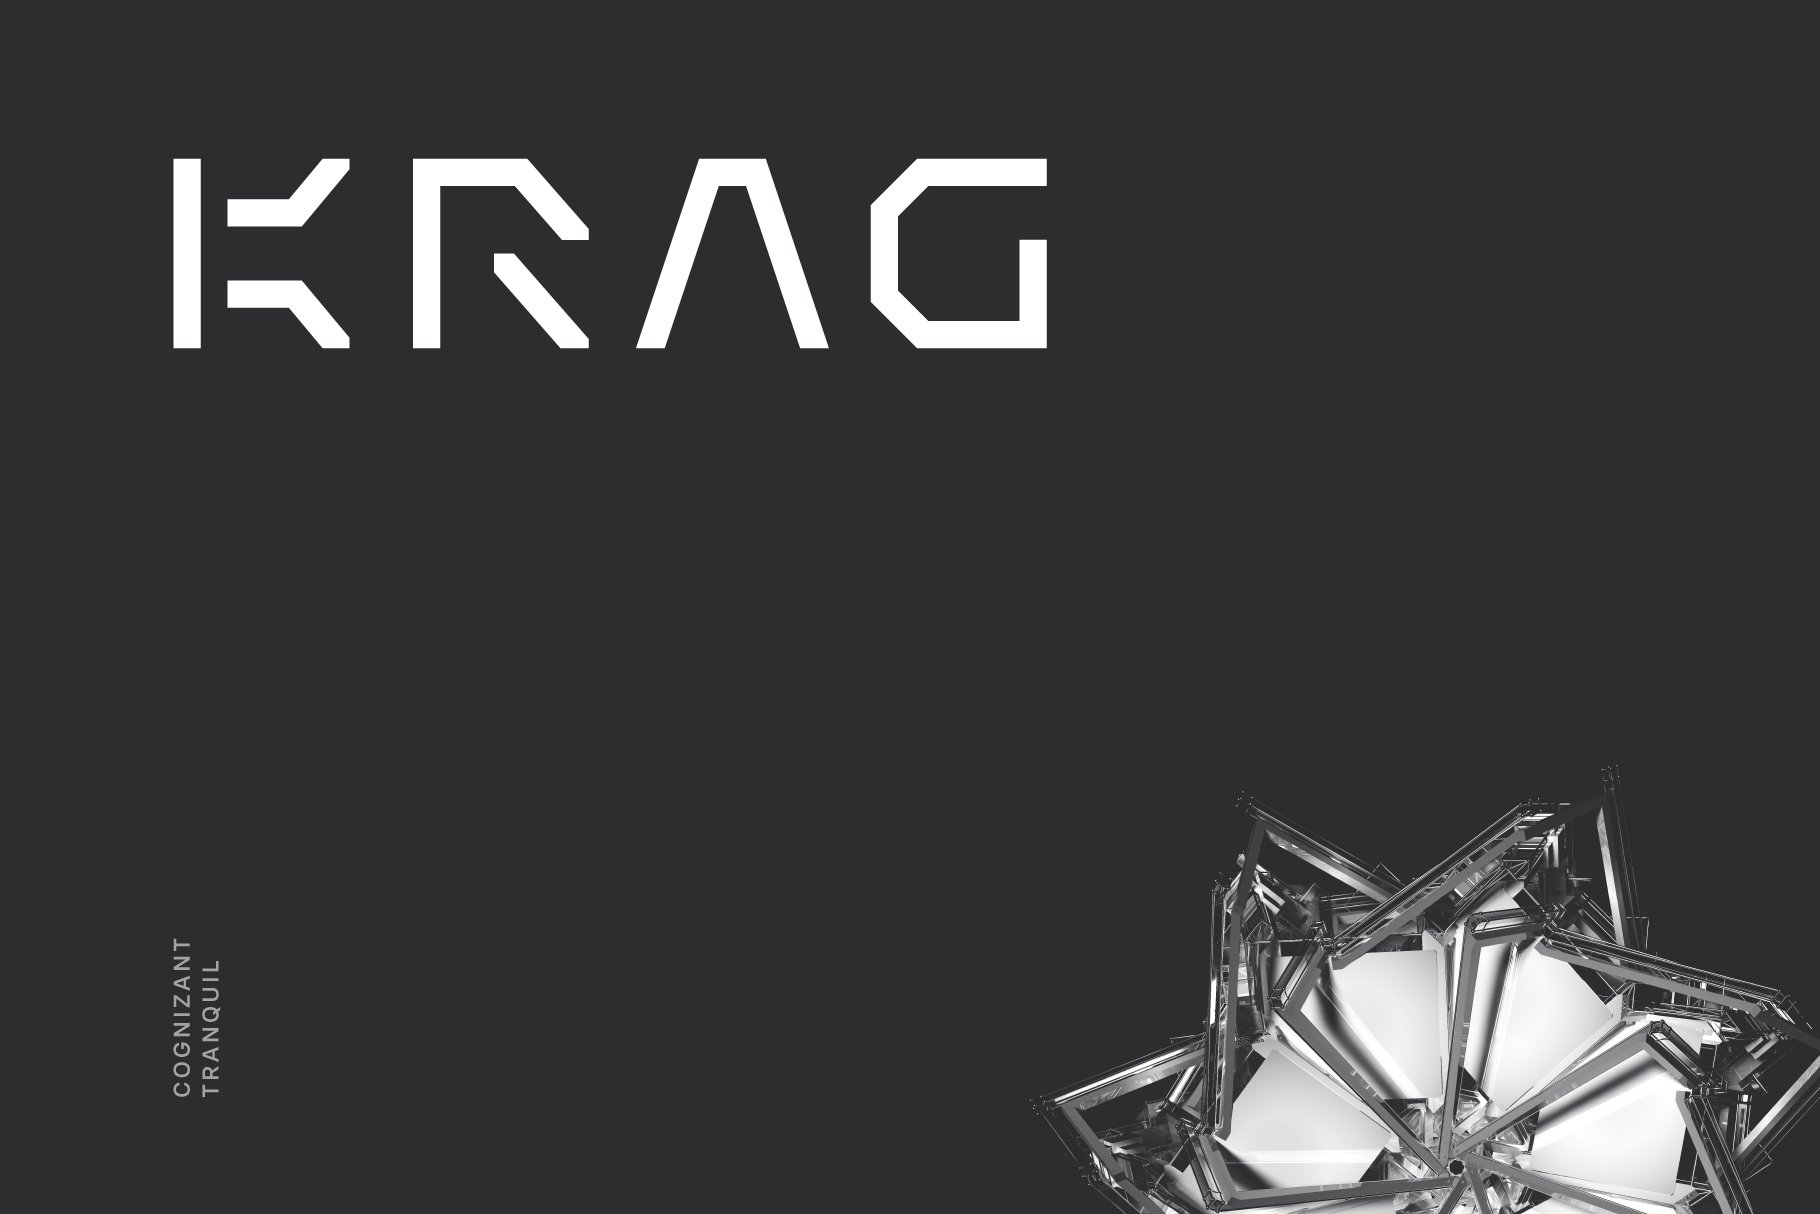 Krag Futuristic Tech Font cover image.